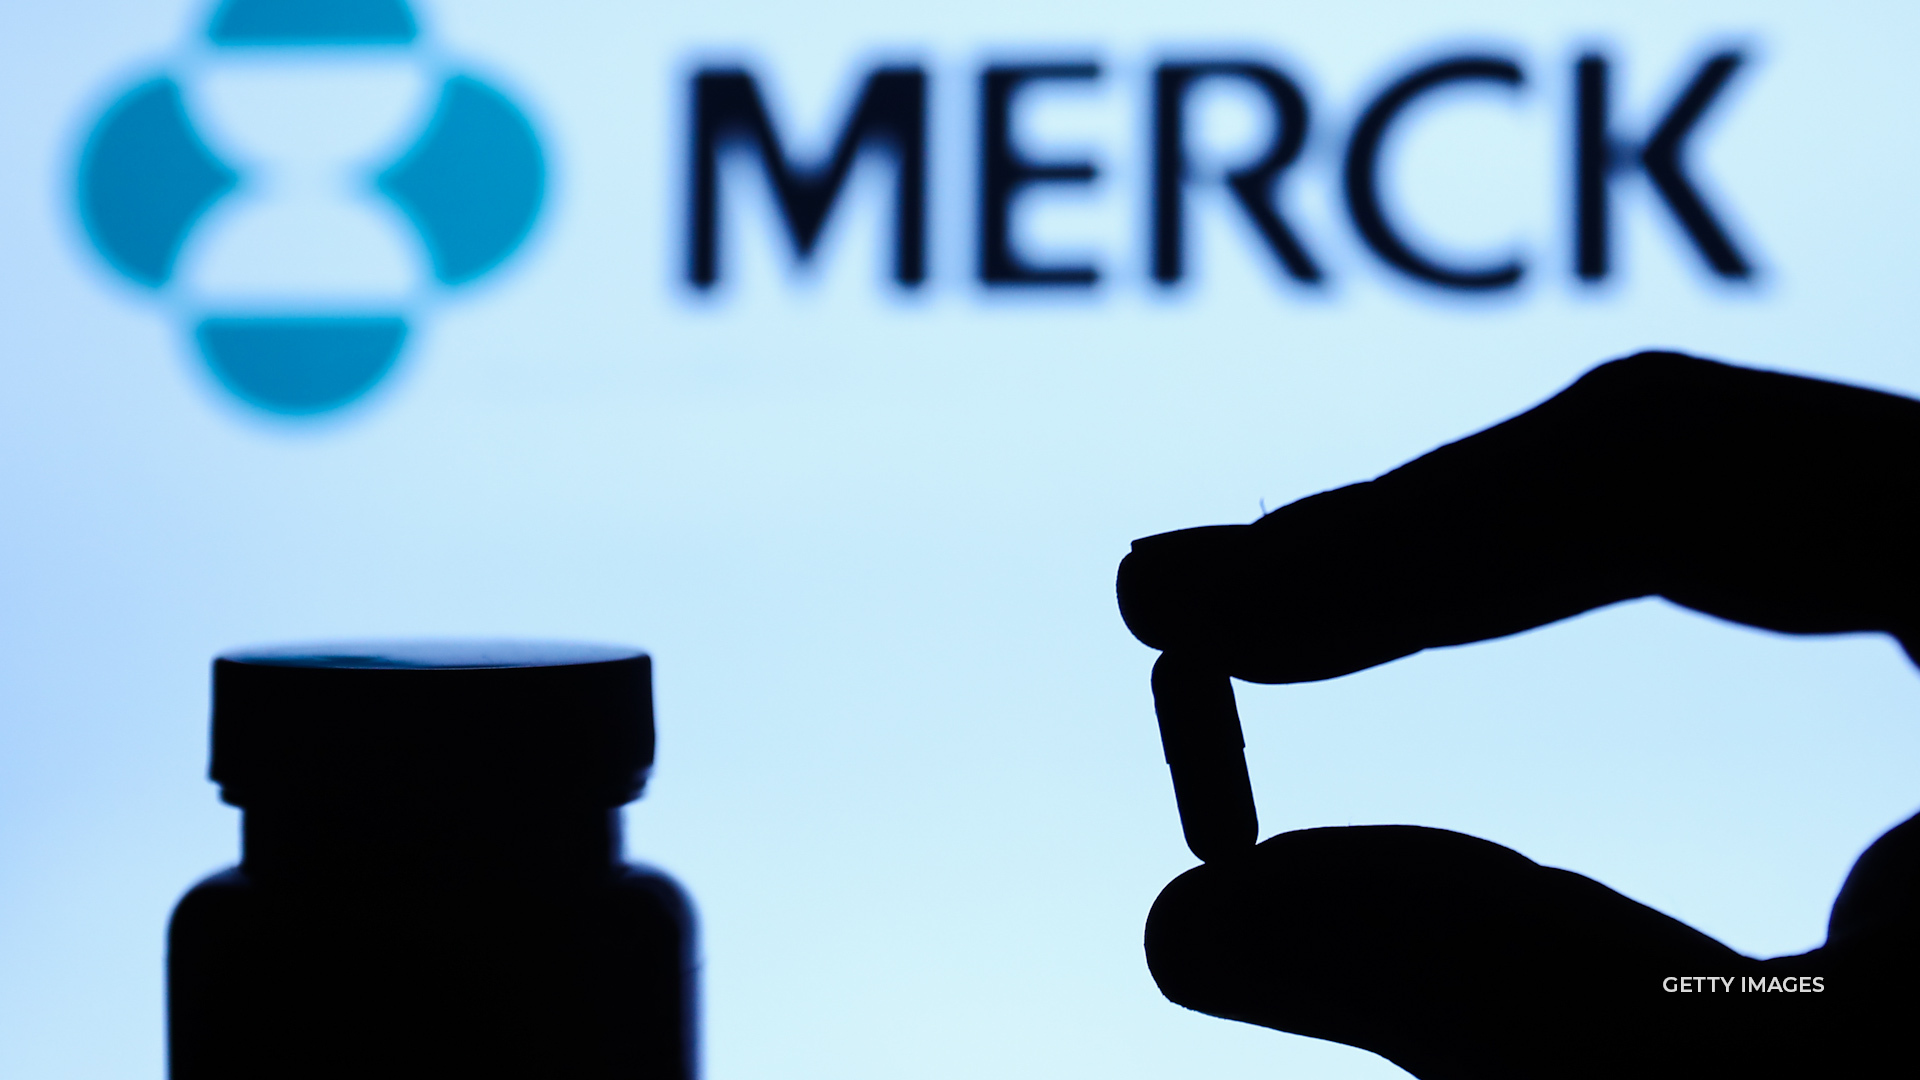 COVID-19 pill maker Merck announced its Q3 financial results Thursday.